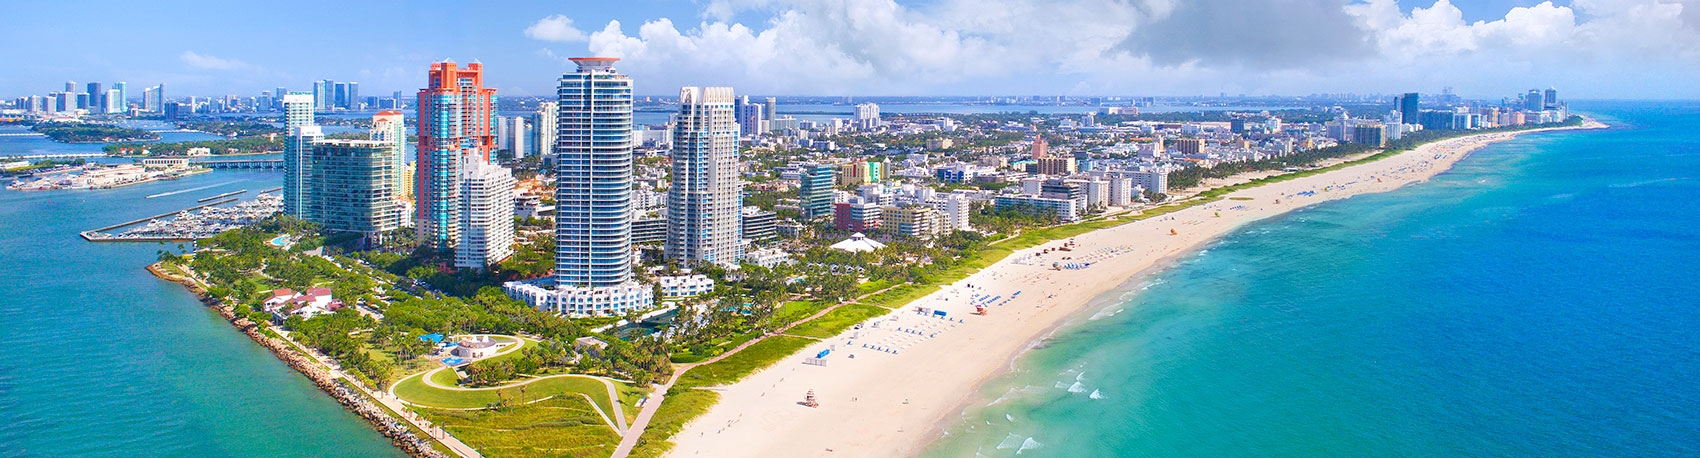 Aerial photo of Miami Beach